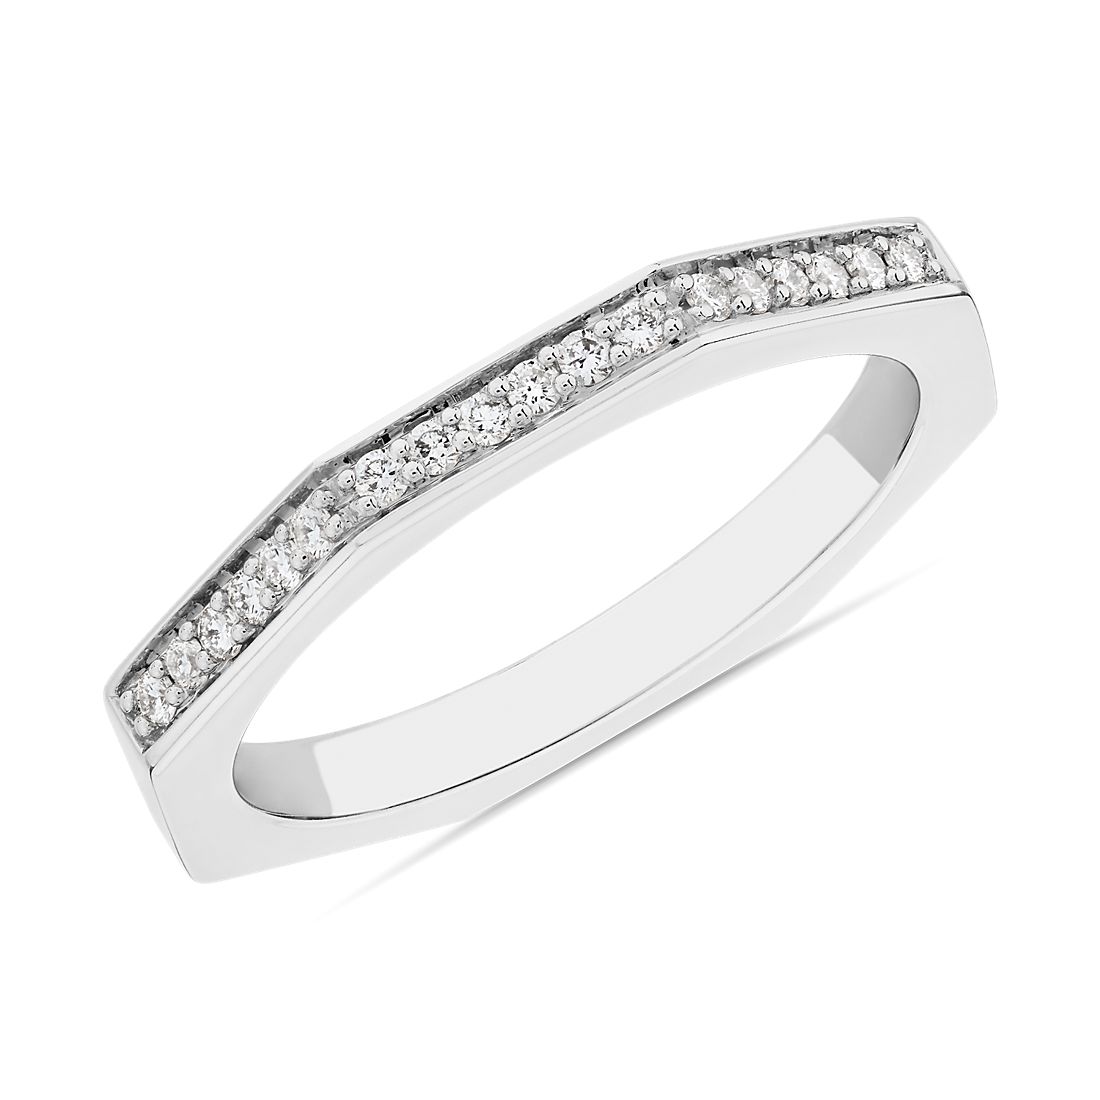 ZAC ZAC POSEN Geometric Diamond Ring in 14k White Gold (2 mm, 1/10 ct. tw.)